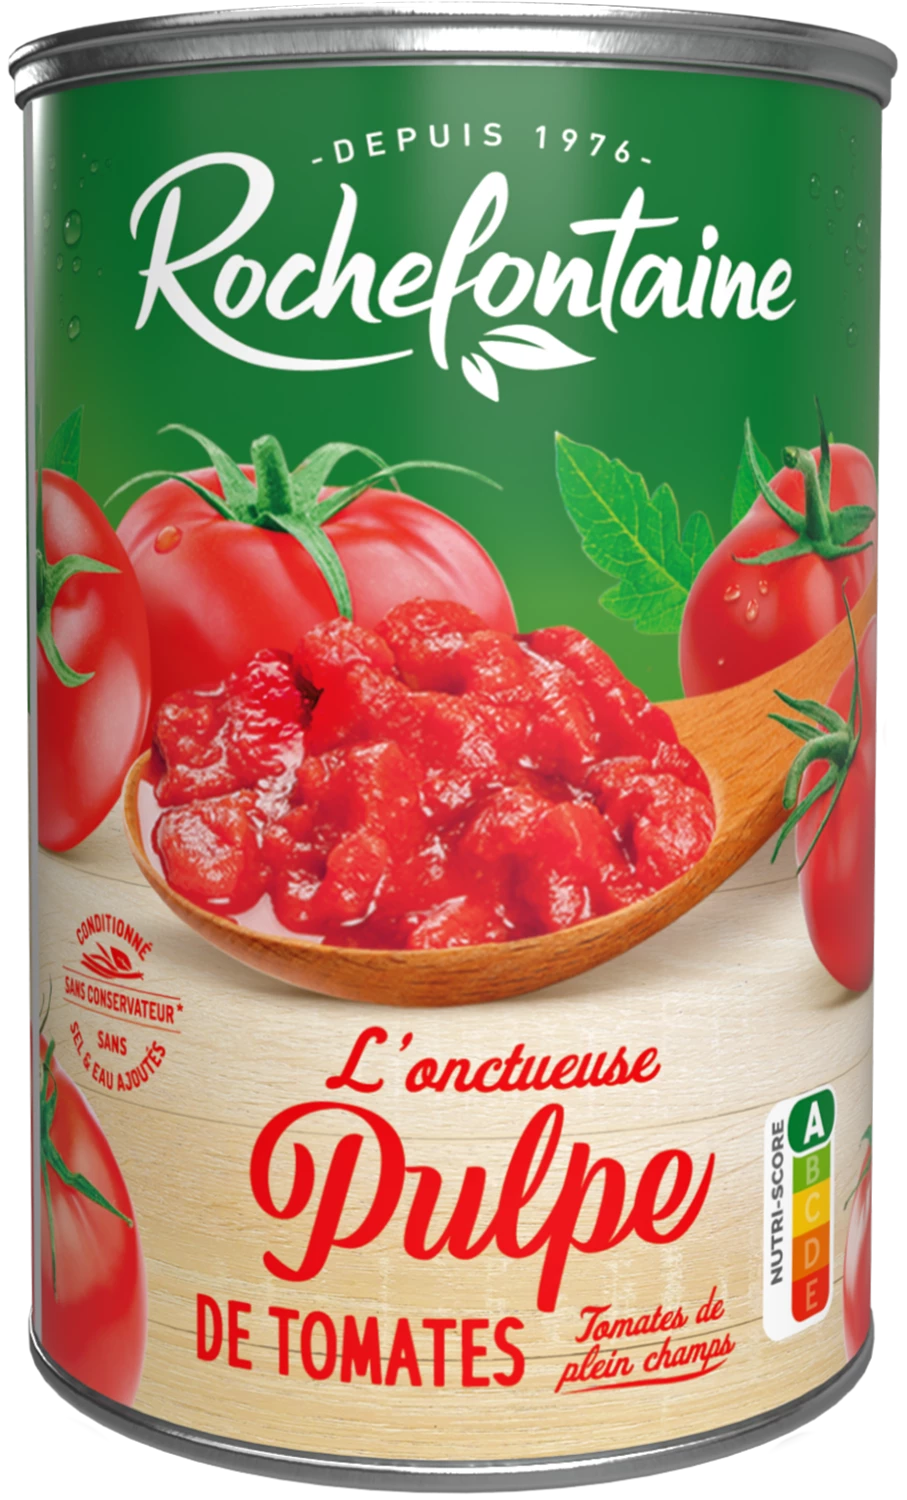 Polpa de tomate 400g